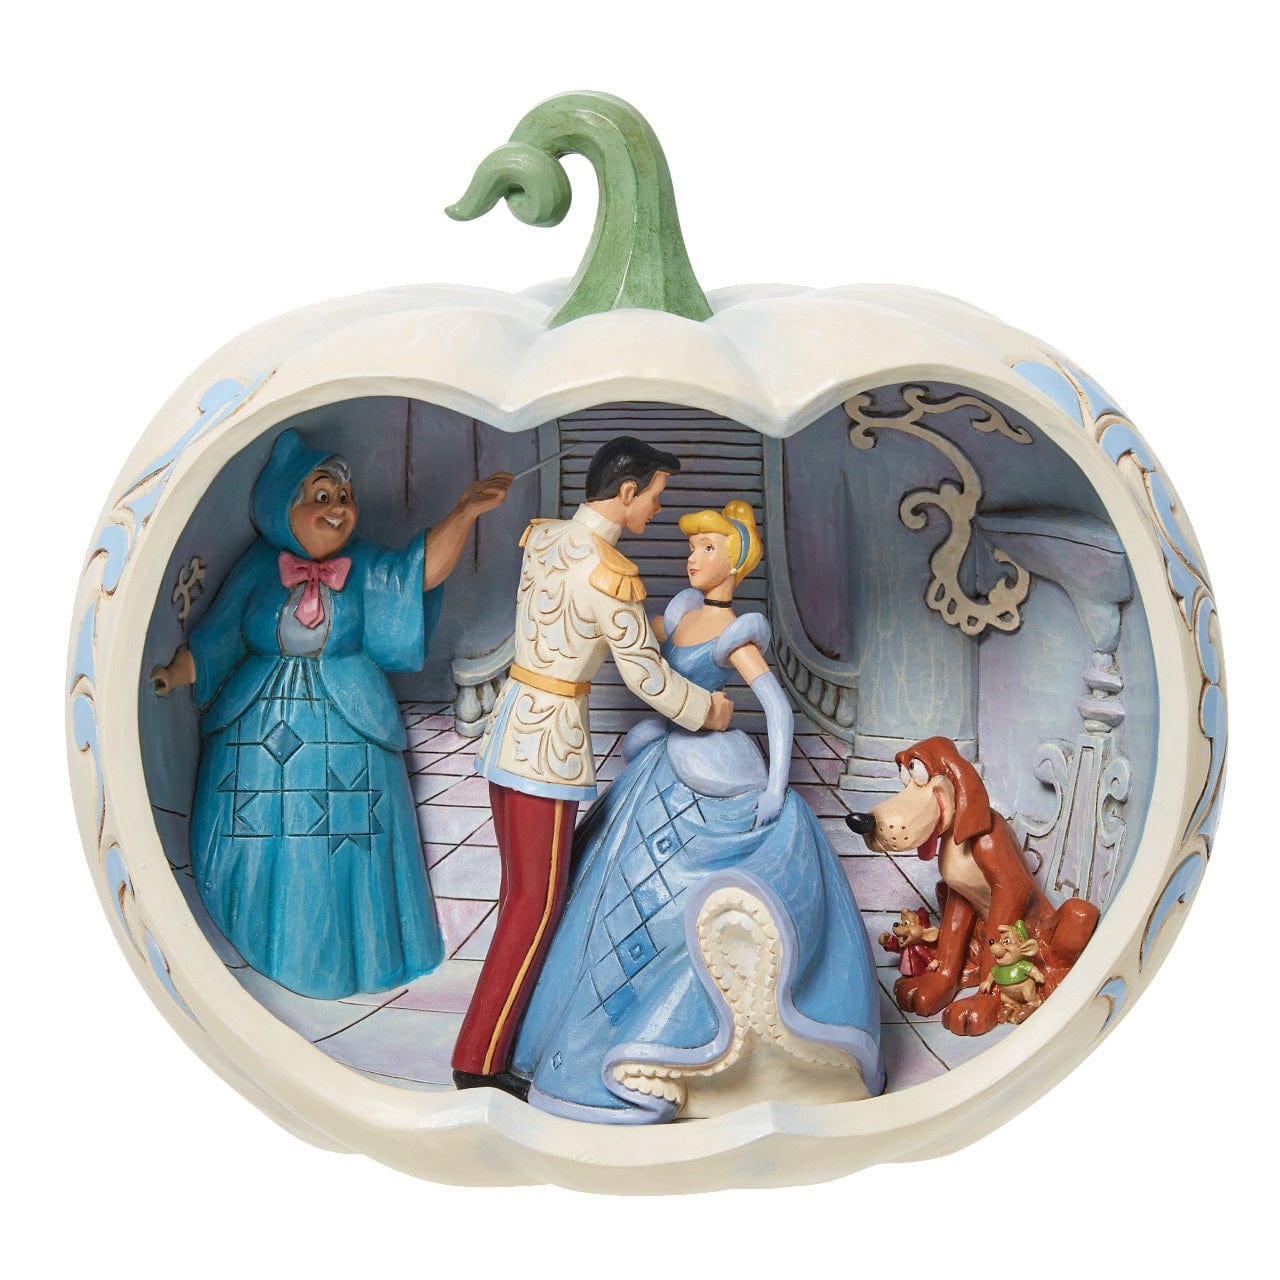 Enesco Disney Ornament Disney Traditions Figurine - Cinderella - Love at First Sight